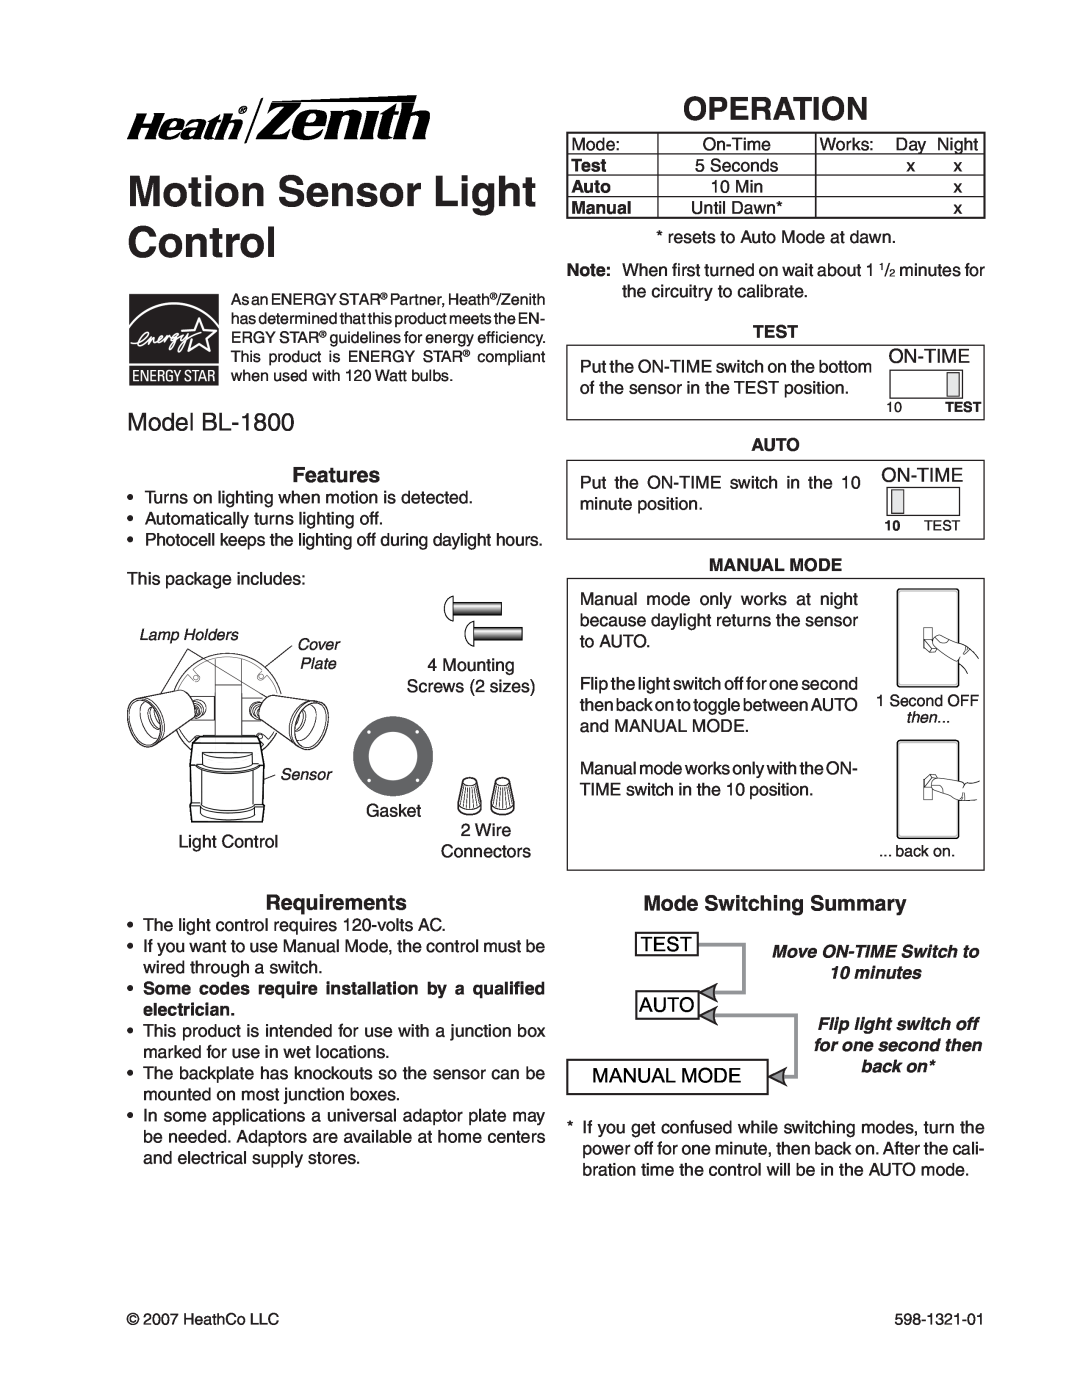 Heath Zenith manual Motion Sensor Light Control, Operation, Model BL-1800, On-Time, Test, Auto, Manual Mode, minutes 